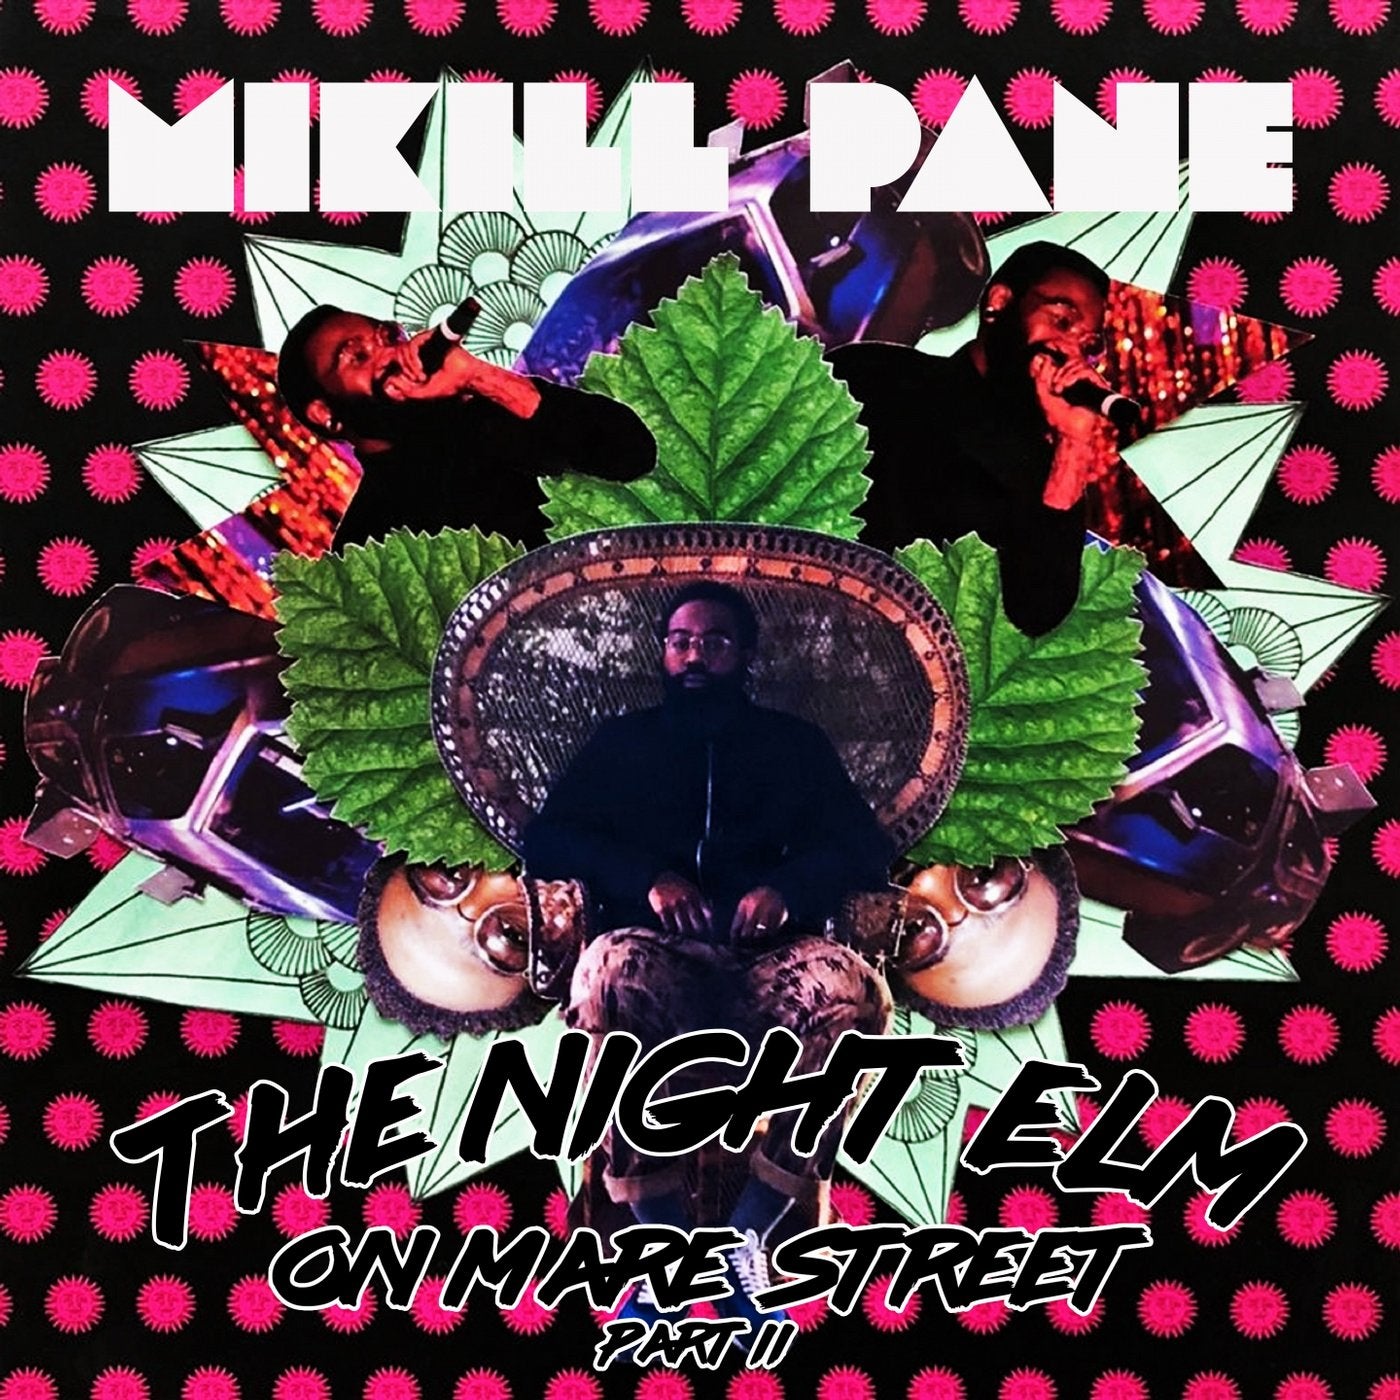 The Night Elm on Mare Street, Pt. 2